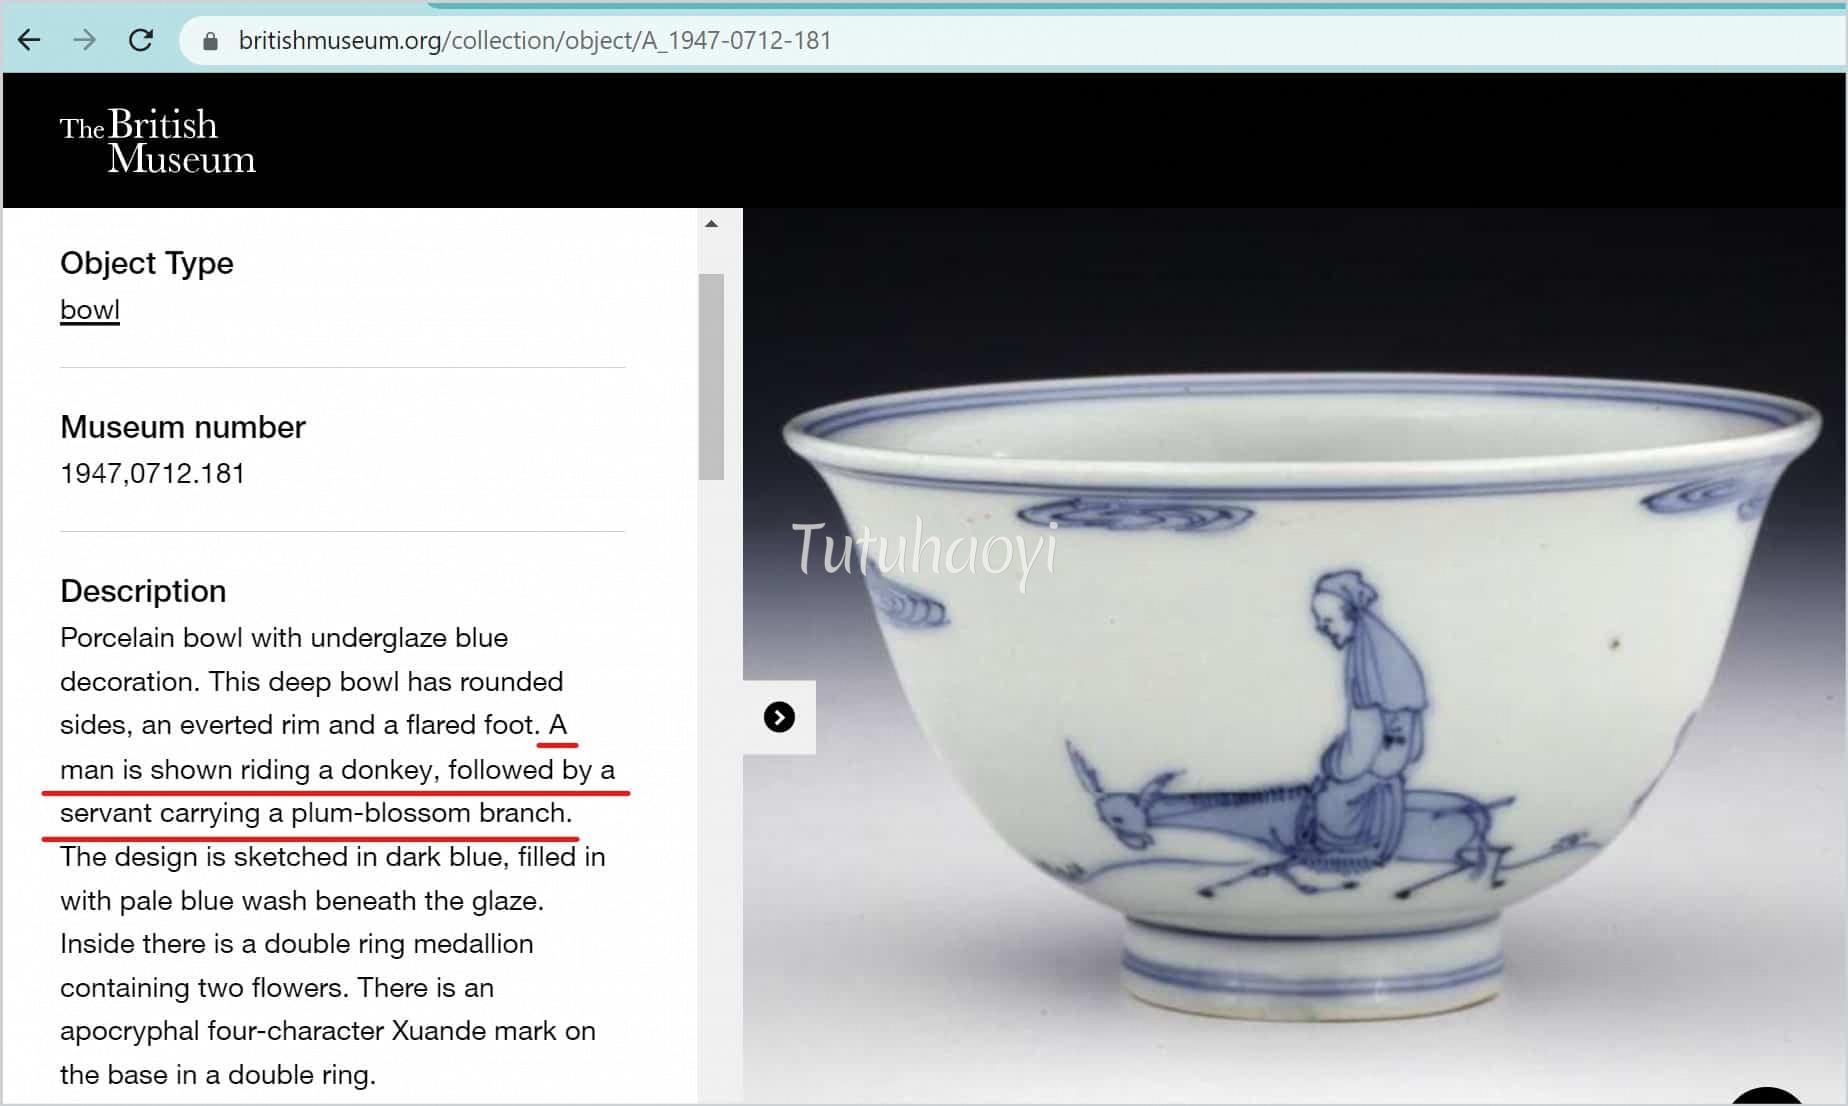 scholar on donkey porcelain blue-and-white bowl